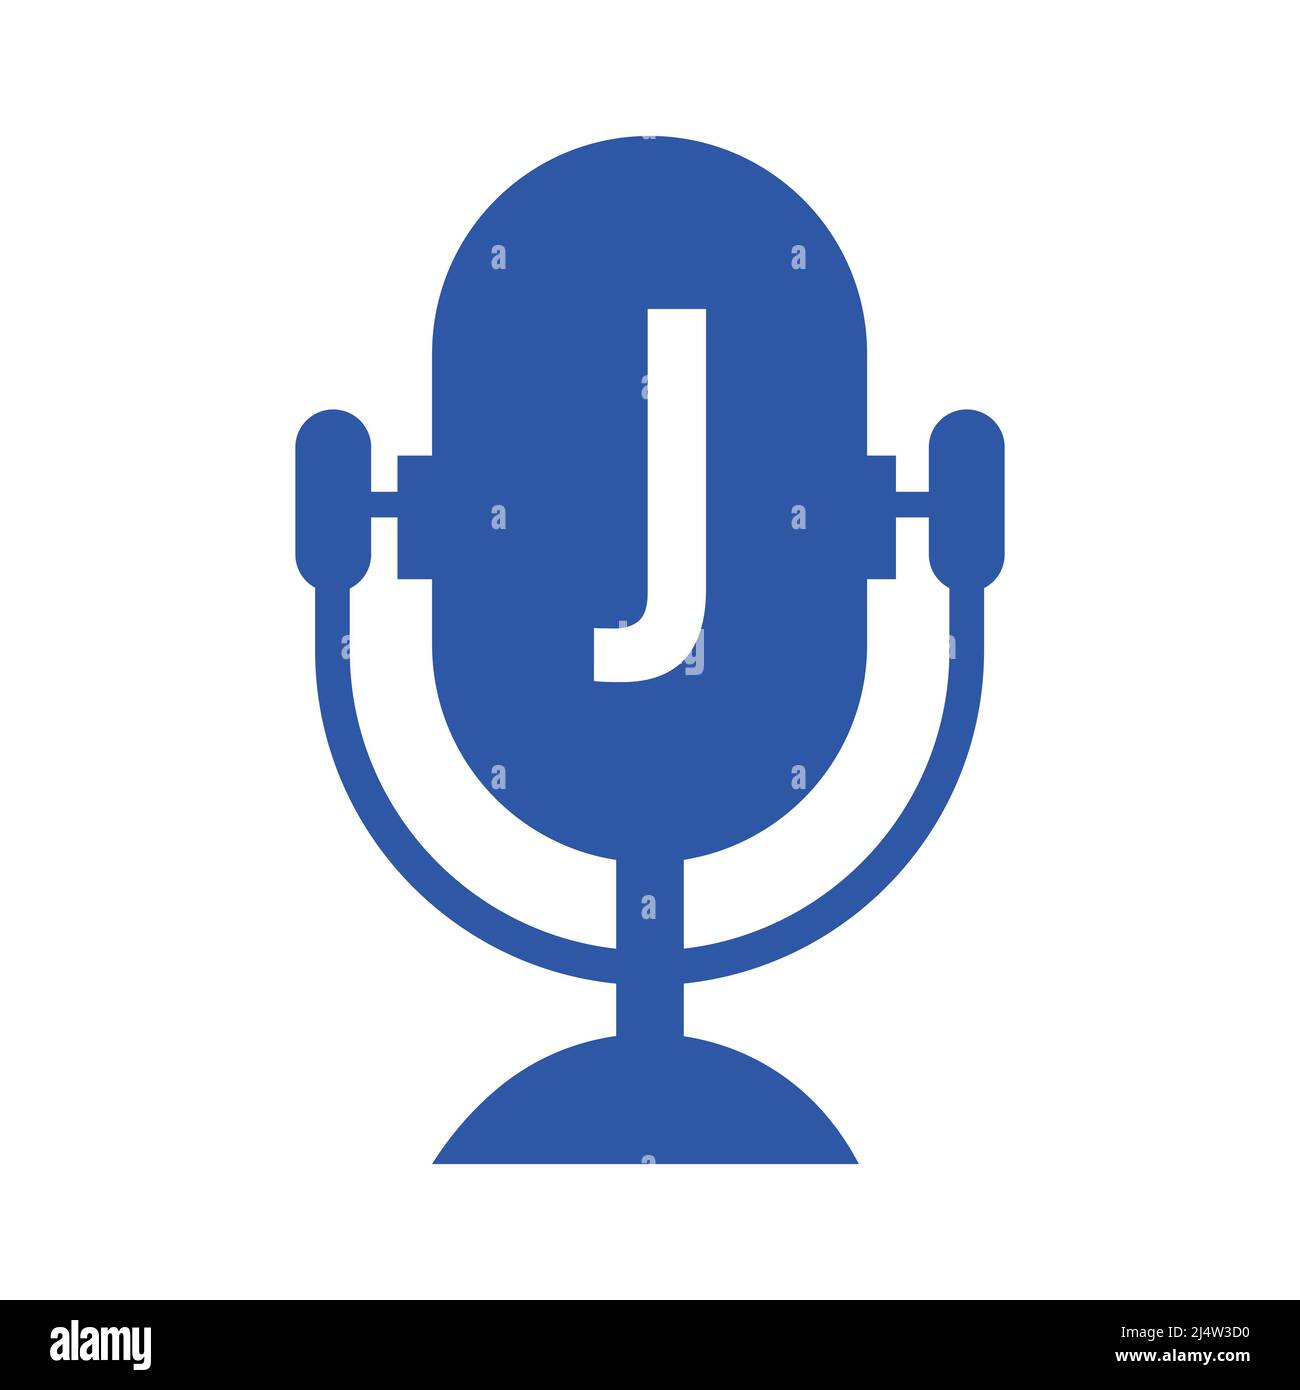 Podcast Radio Logo On Letter J Design Using Microphone Template. Dj Music, Podcast Logo Design, Mix Audio Broadcast Vector Stock Vector